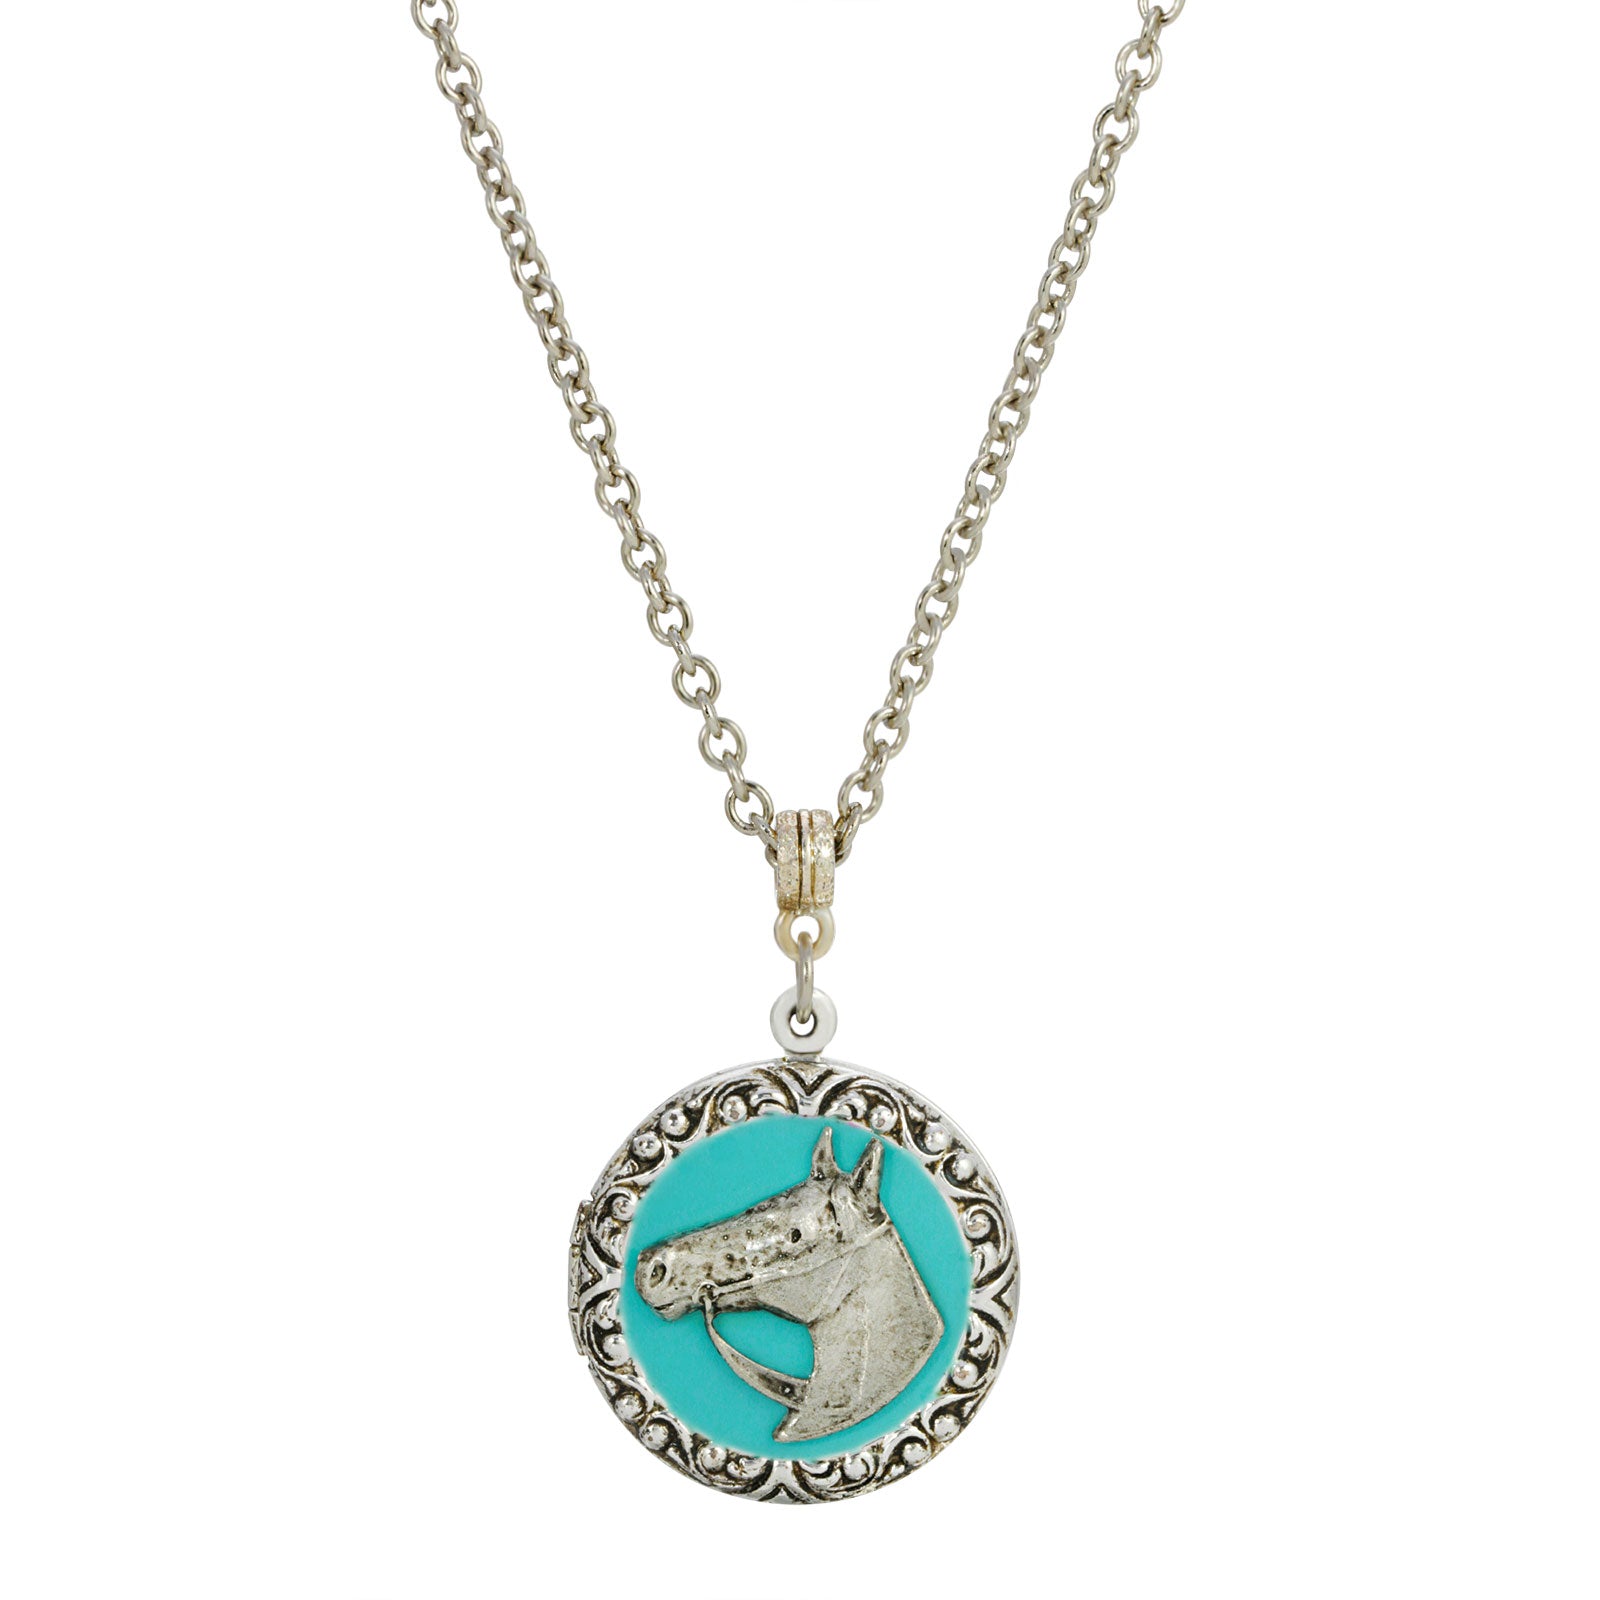 Silver Tone Turquoise Enamel Horse Necklace 24